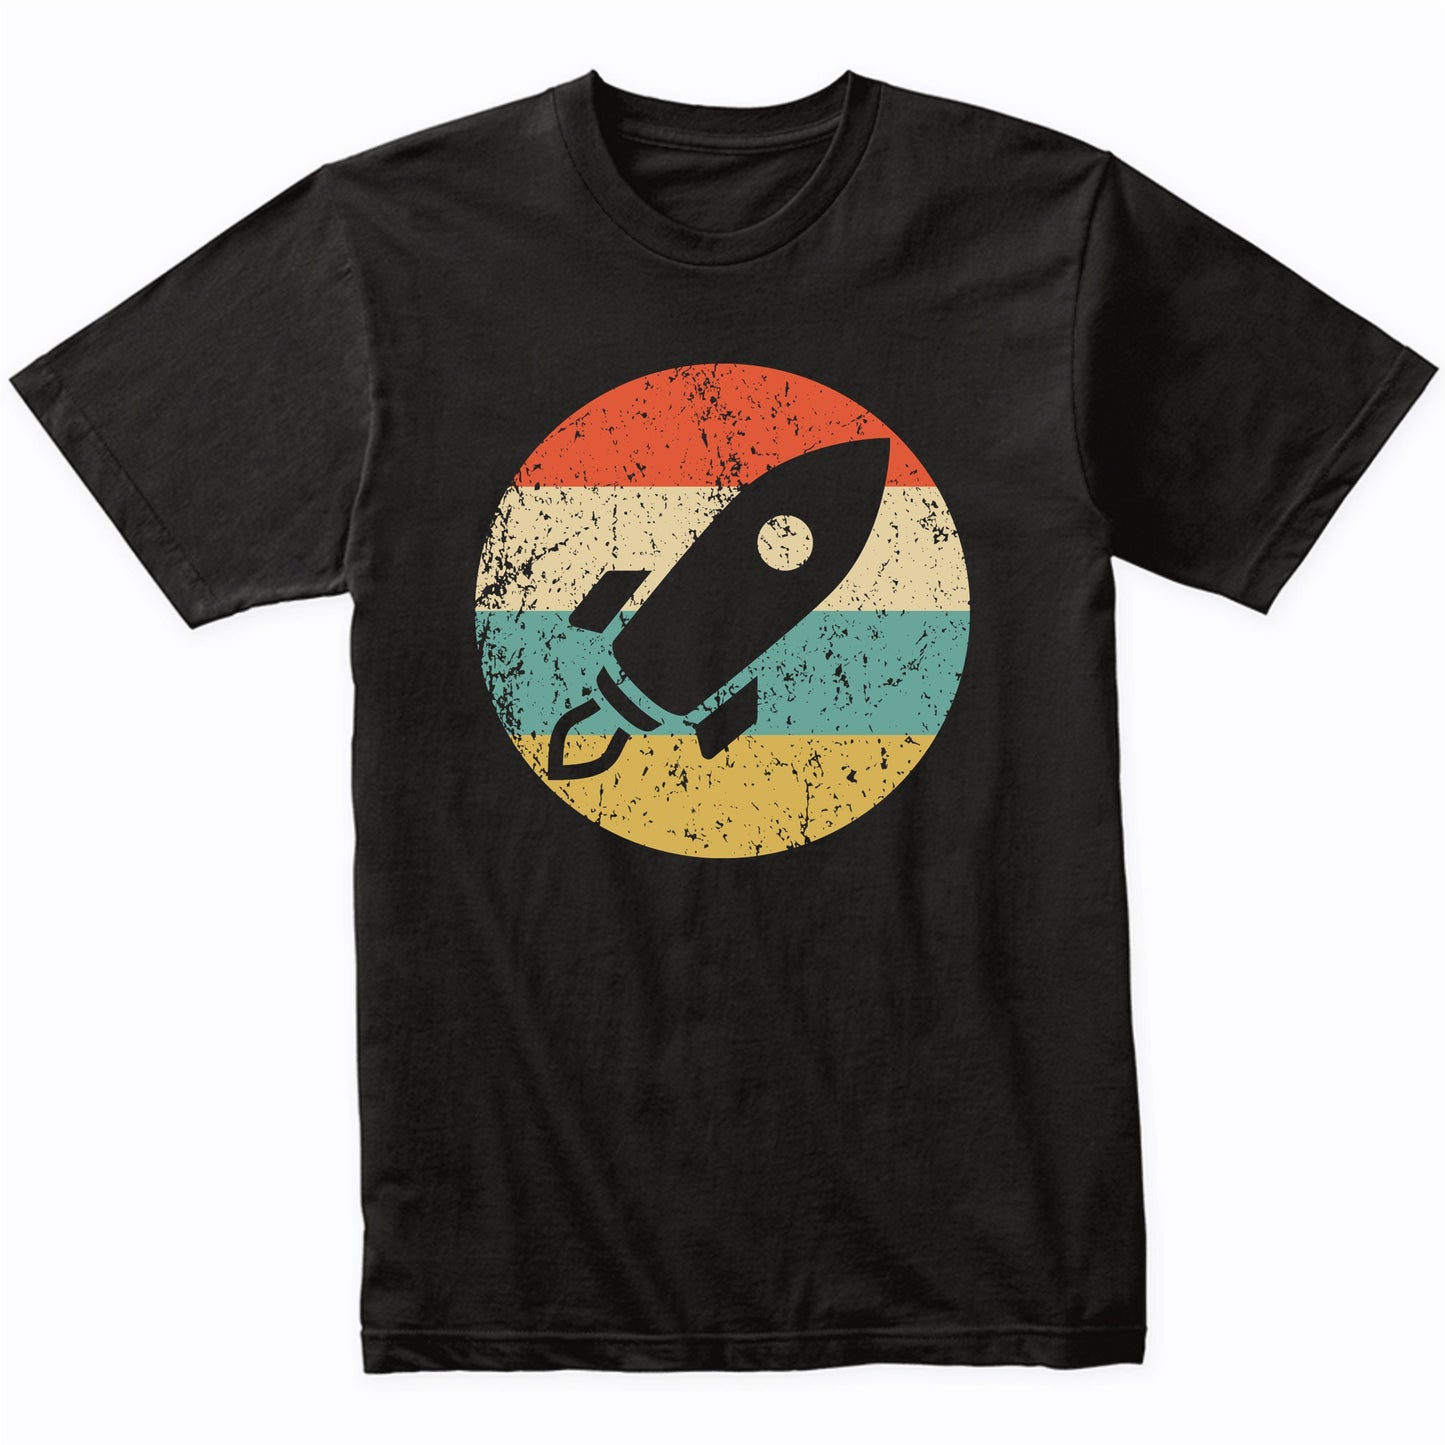 Astronaut Shirt - Vintage Retro Space Ship T-Shirt